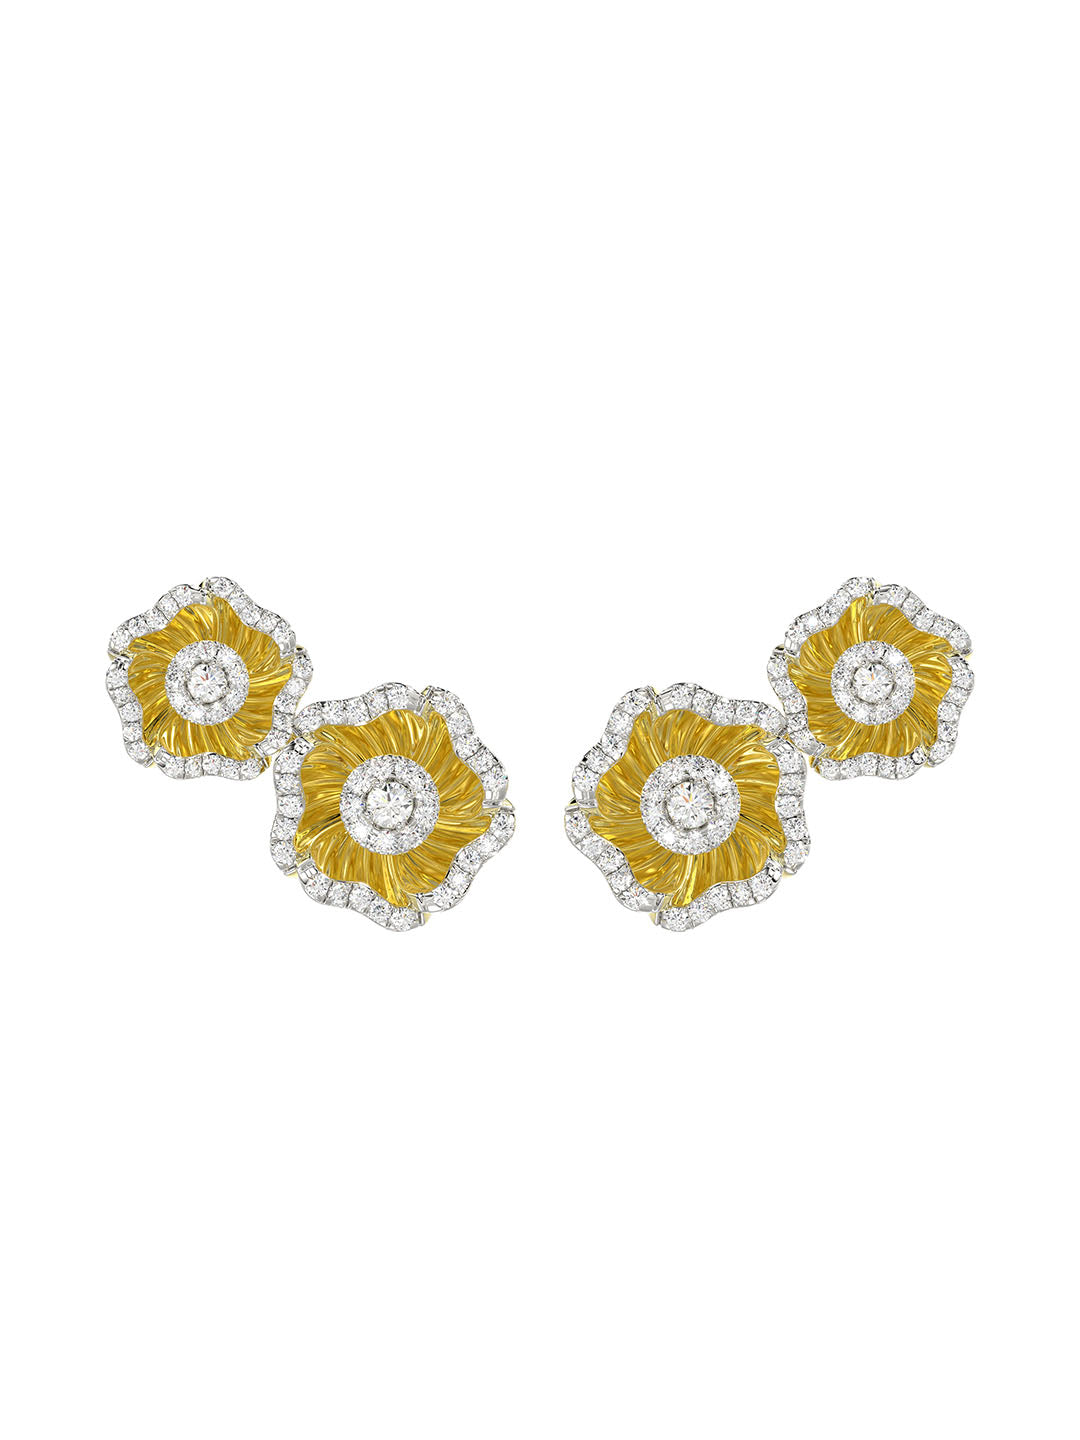 Halo Flower Yellow Gold Earrings | Marchesa